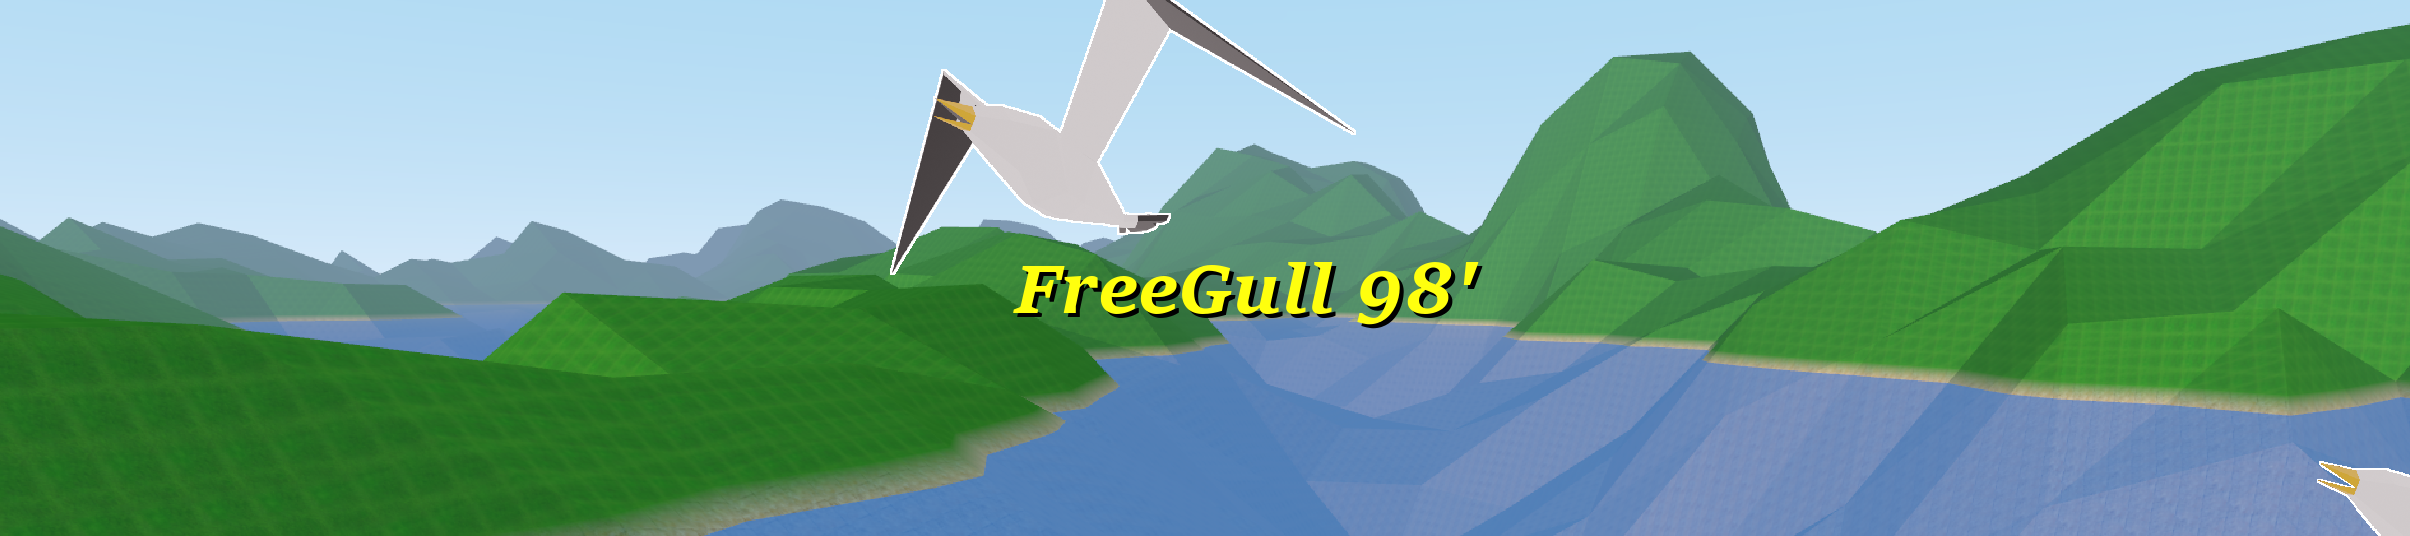 Freegull '98